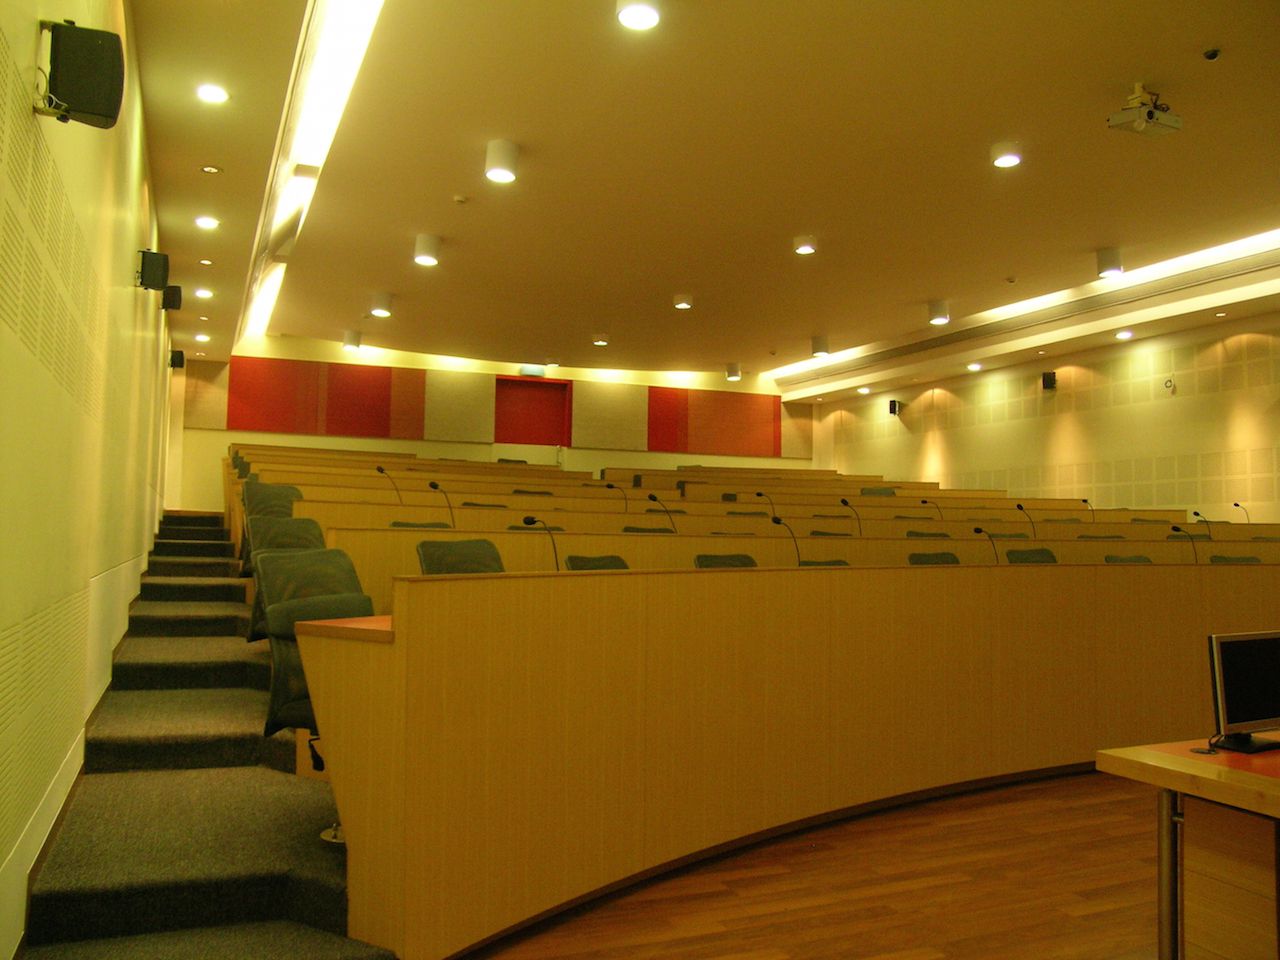 JPAC- Jairamdas Patel Academic Center at the Muljibhai Patel Urological Hospital Campus Nadiad, Gujarat by Indigo Architects 49